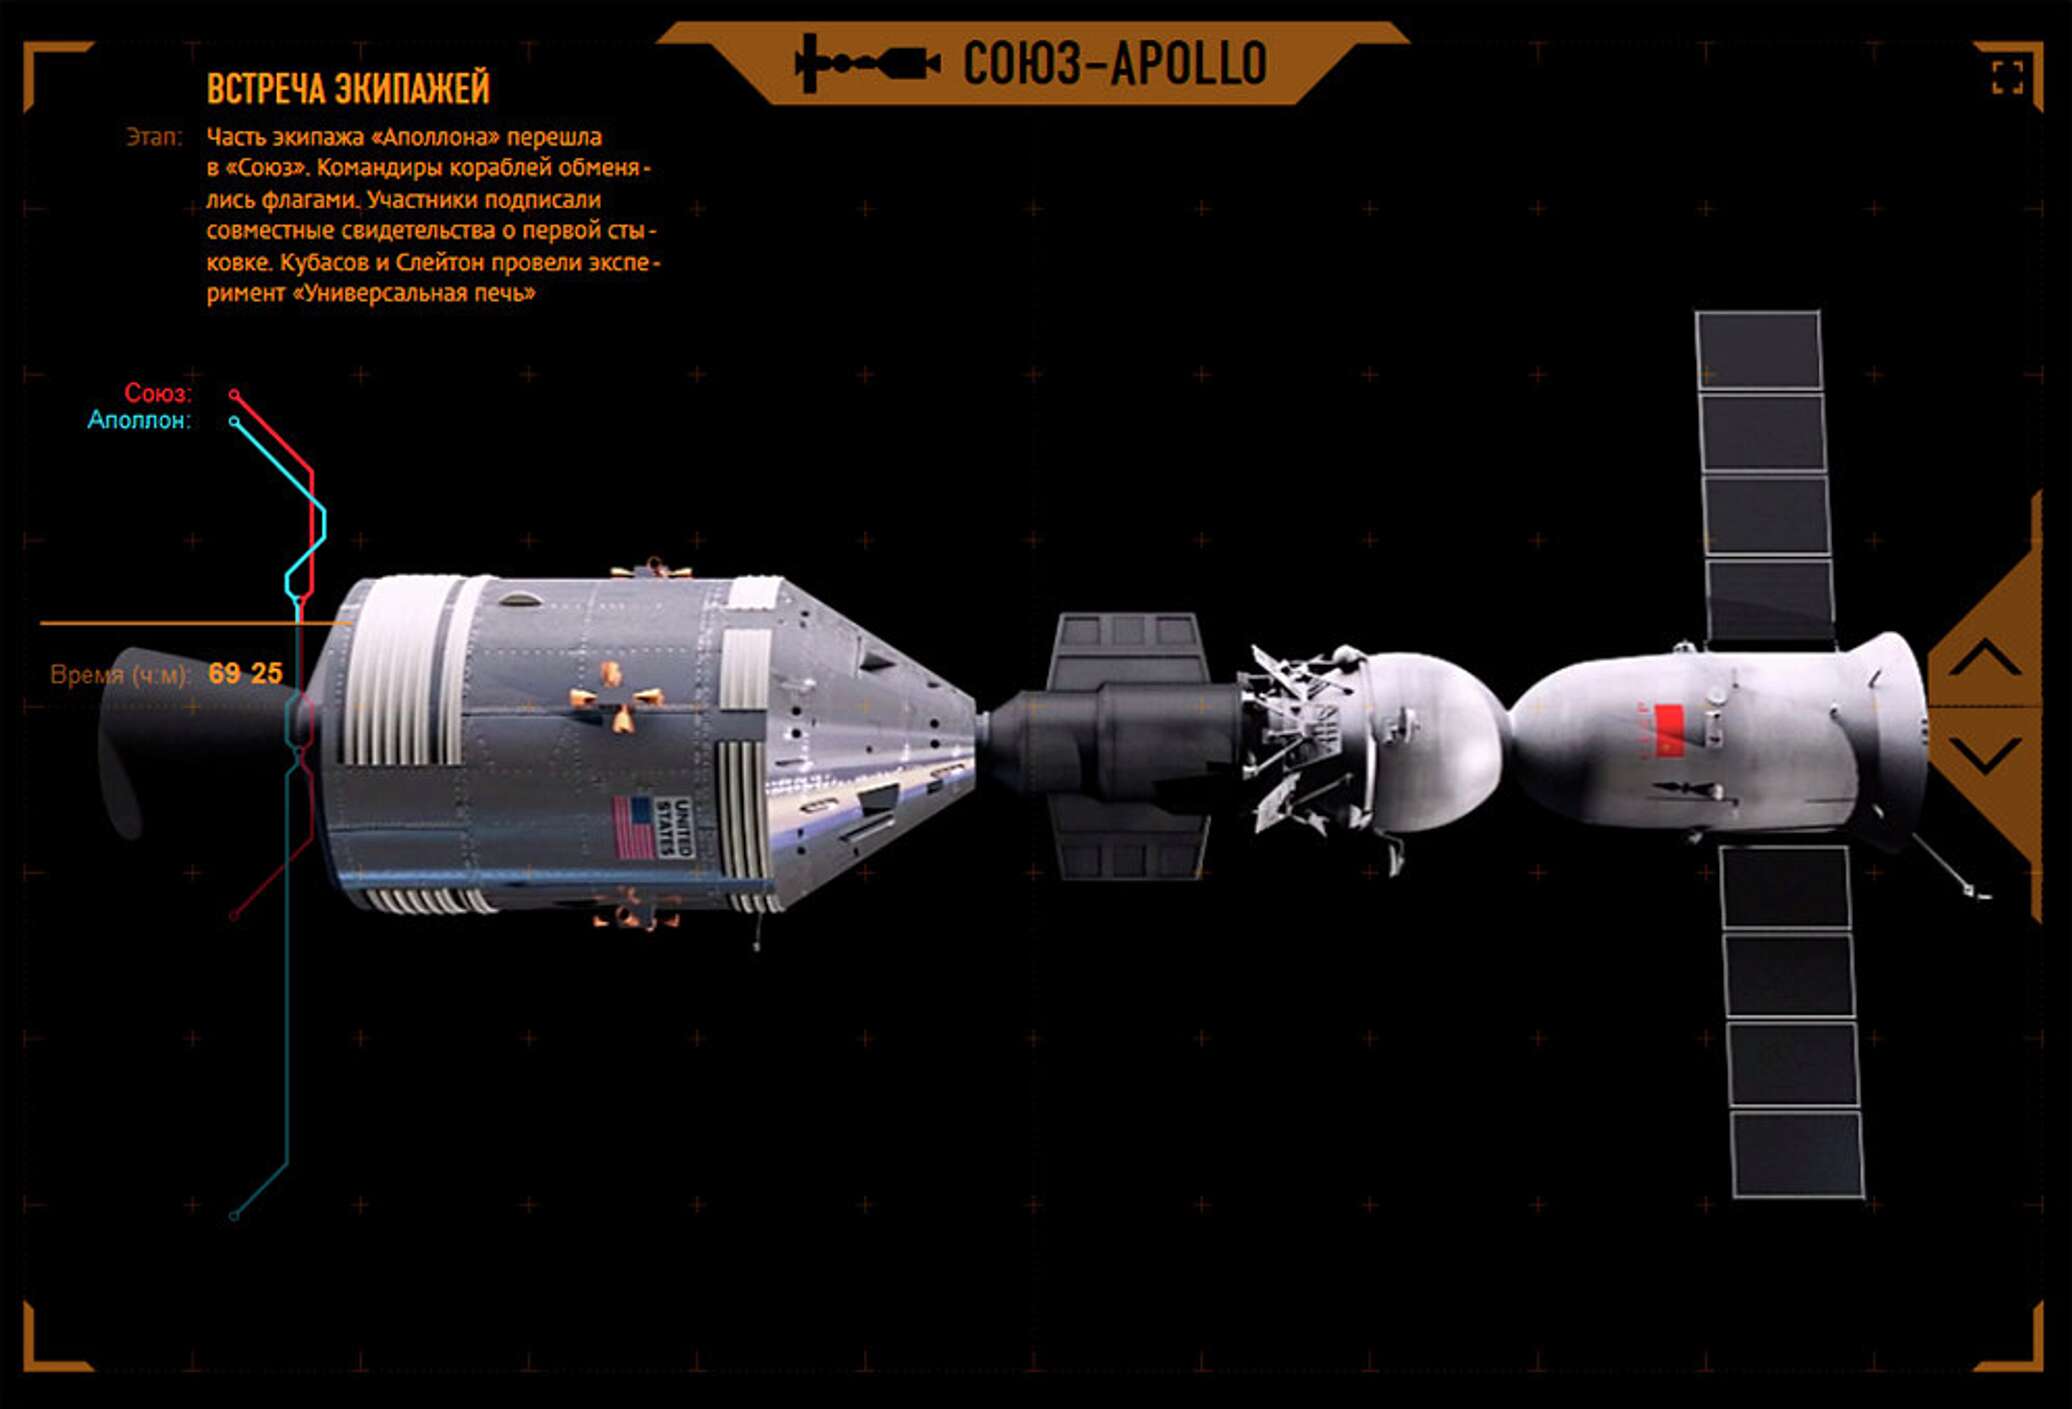 Союз-Аполлон ракета